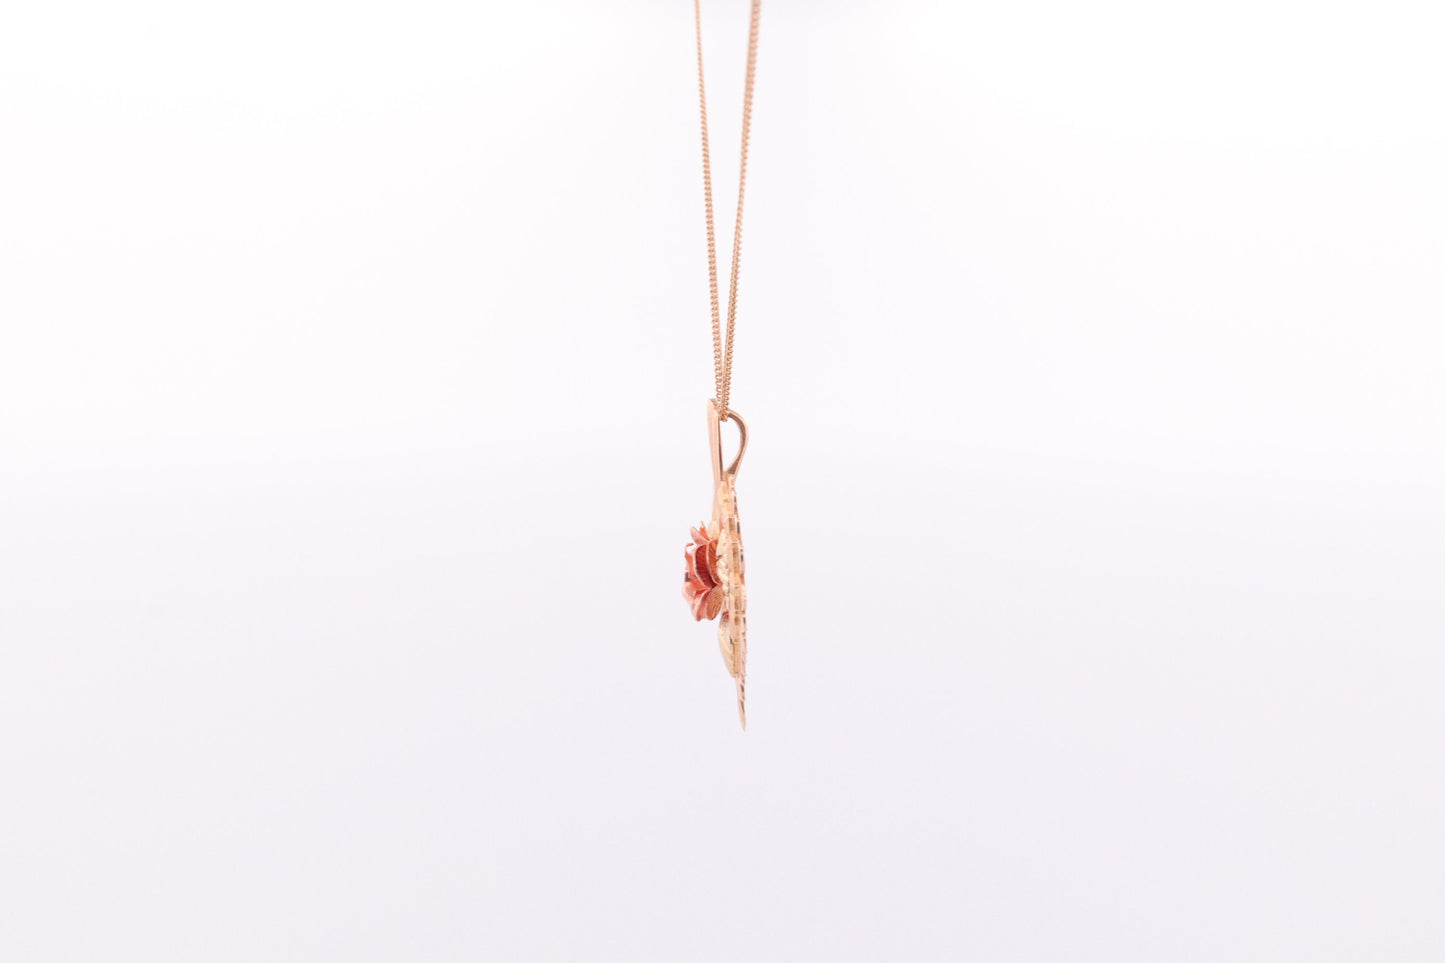 Black Hills Gold Heart Necklace. Large Open Filigree Heart with Rose. 10k multi tone Black Hills Gold. st(60)